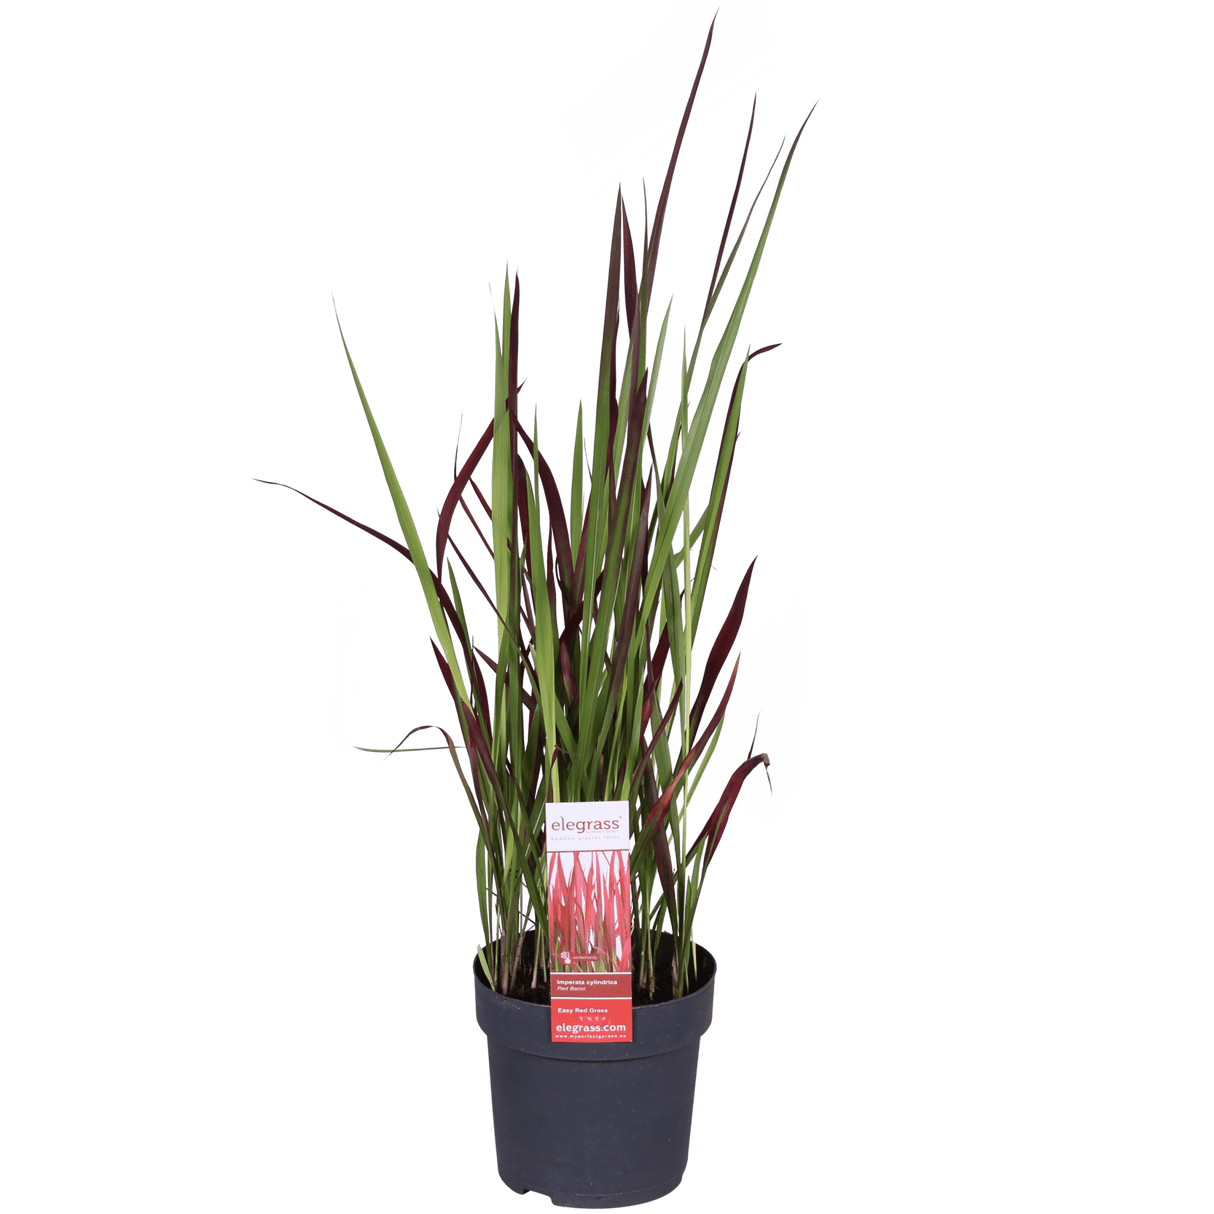 Livraison plante - Imperata cylindrica 'Red Baron' - ↨40cm - Ø14 - plante vivace